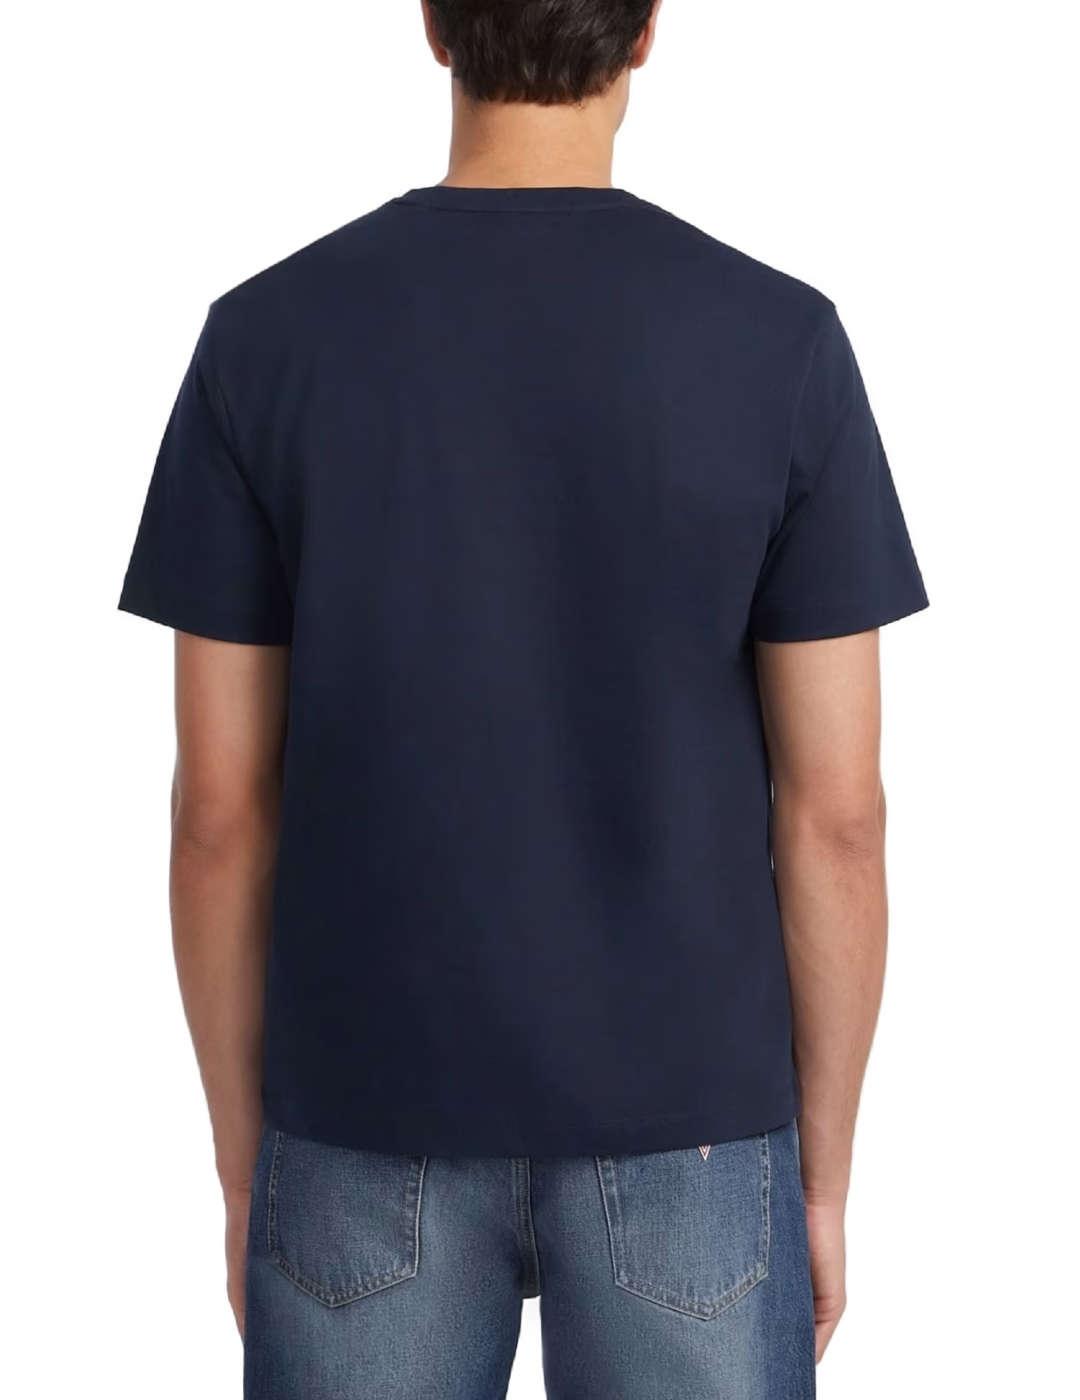 Camiseta Guess Jeans Logo azul manga corta para hombre